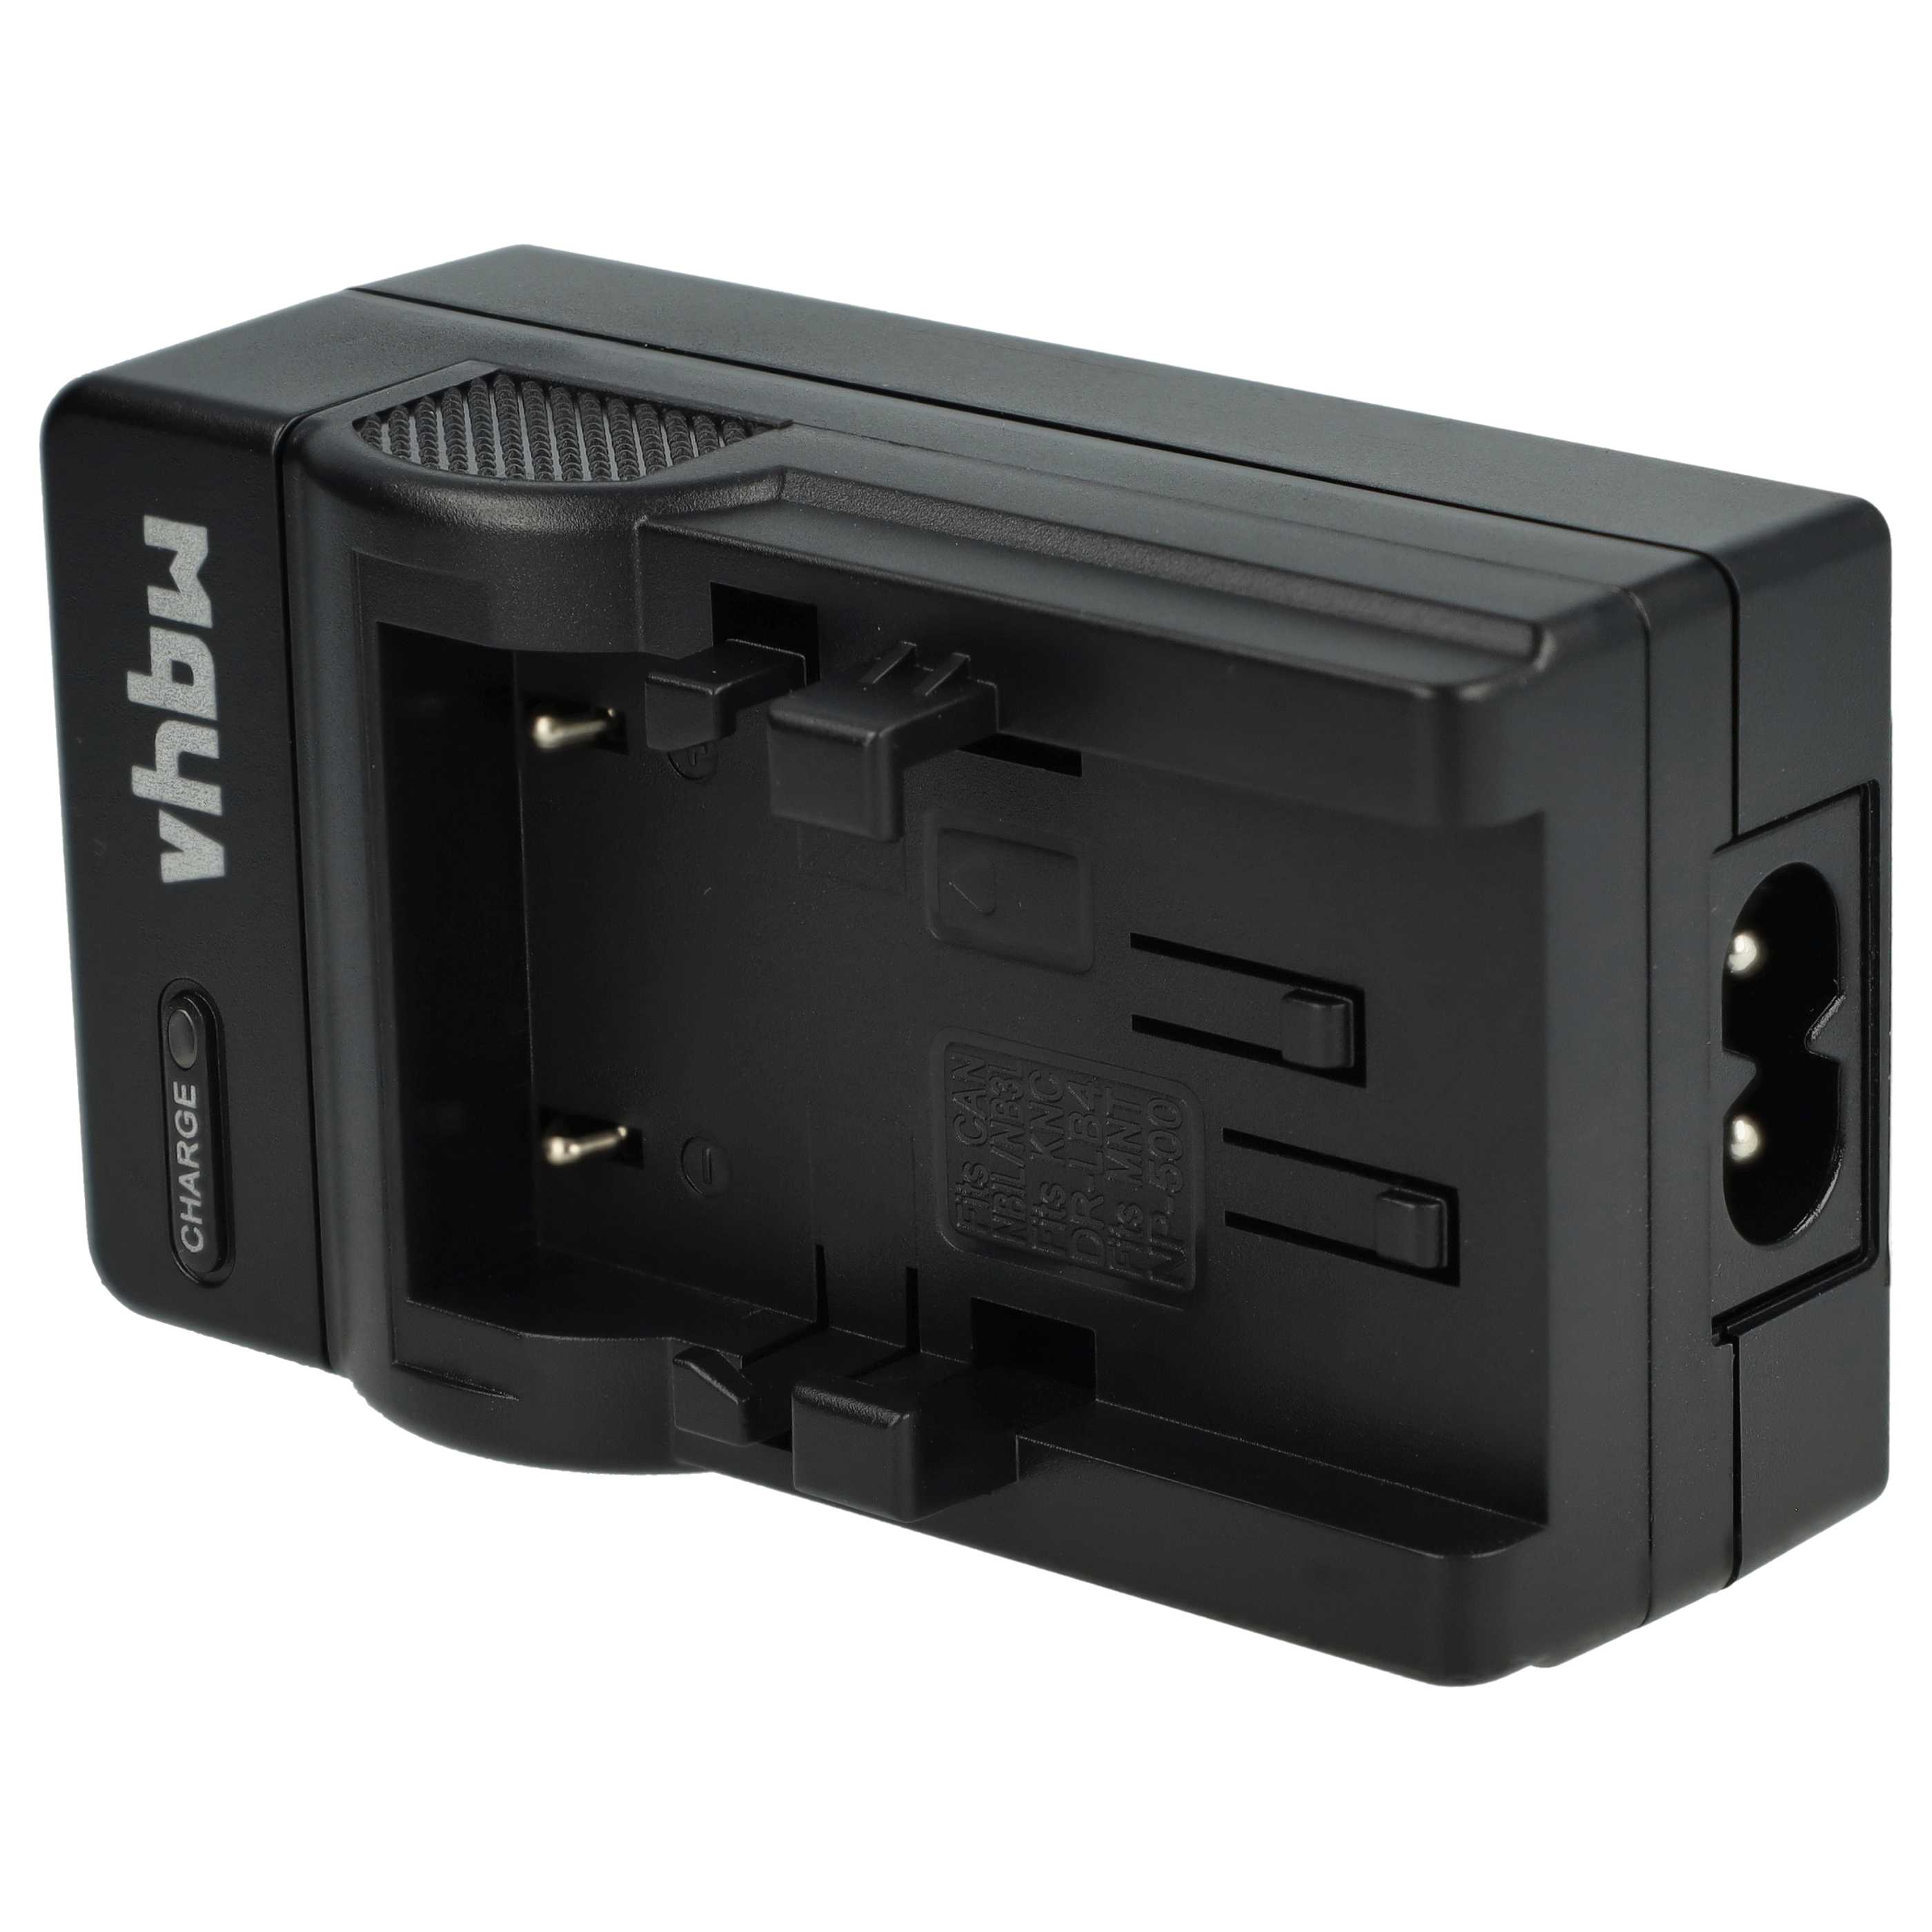 Caricabatterie + adattatore da auto per fotocamera Canon - 0,6A 4,2V 88,5cm